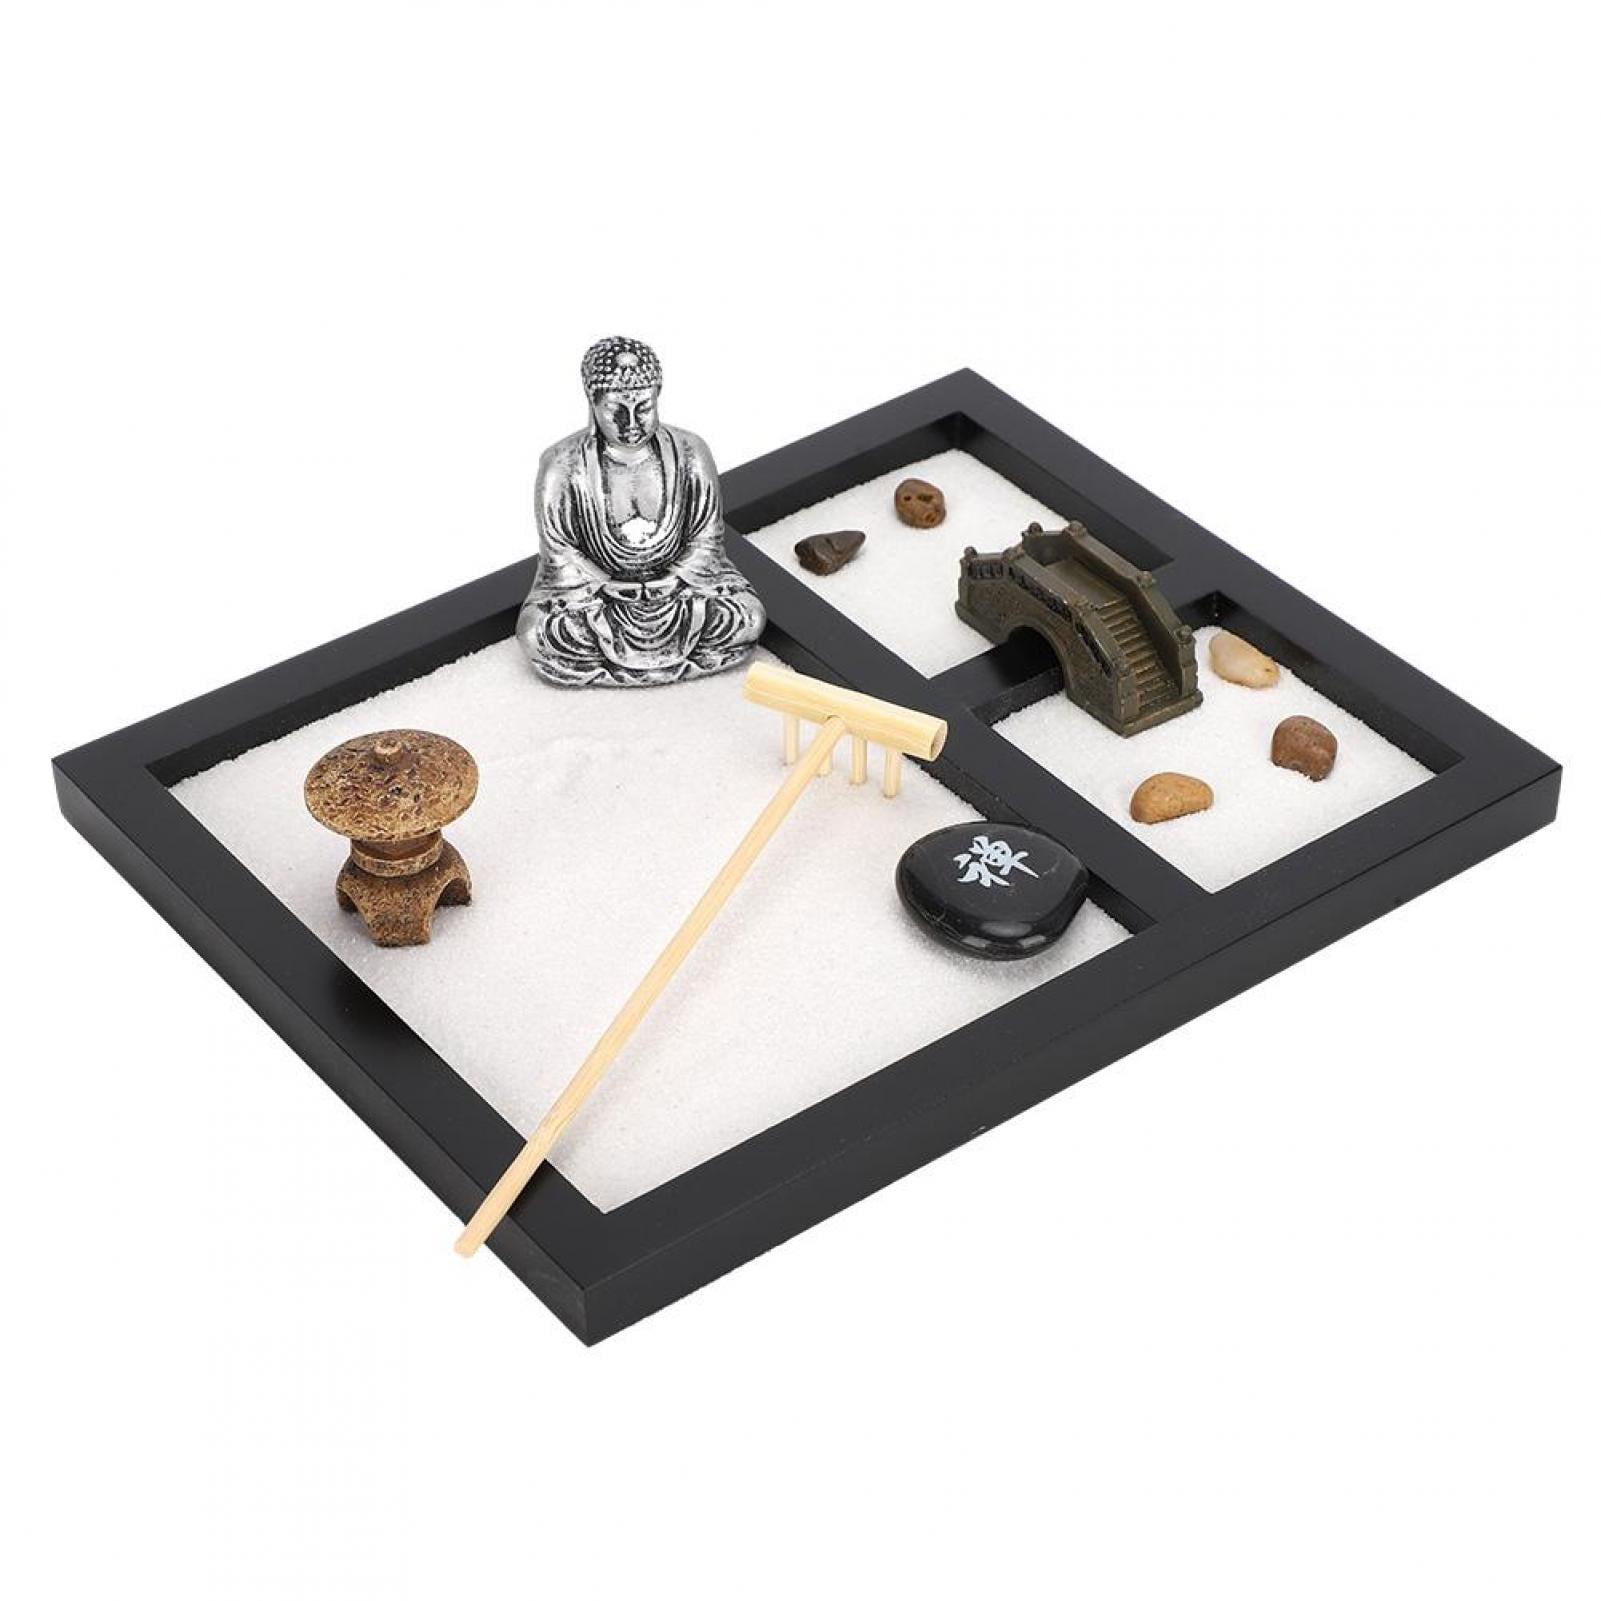 Details about   Zen Garden Kit Mini Meditation Japanese Style Sand Tray Tabletop Decorations 